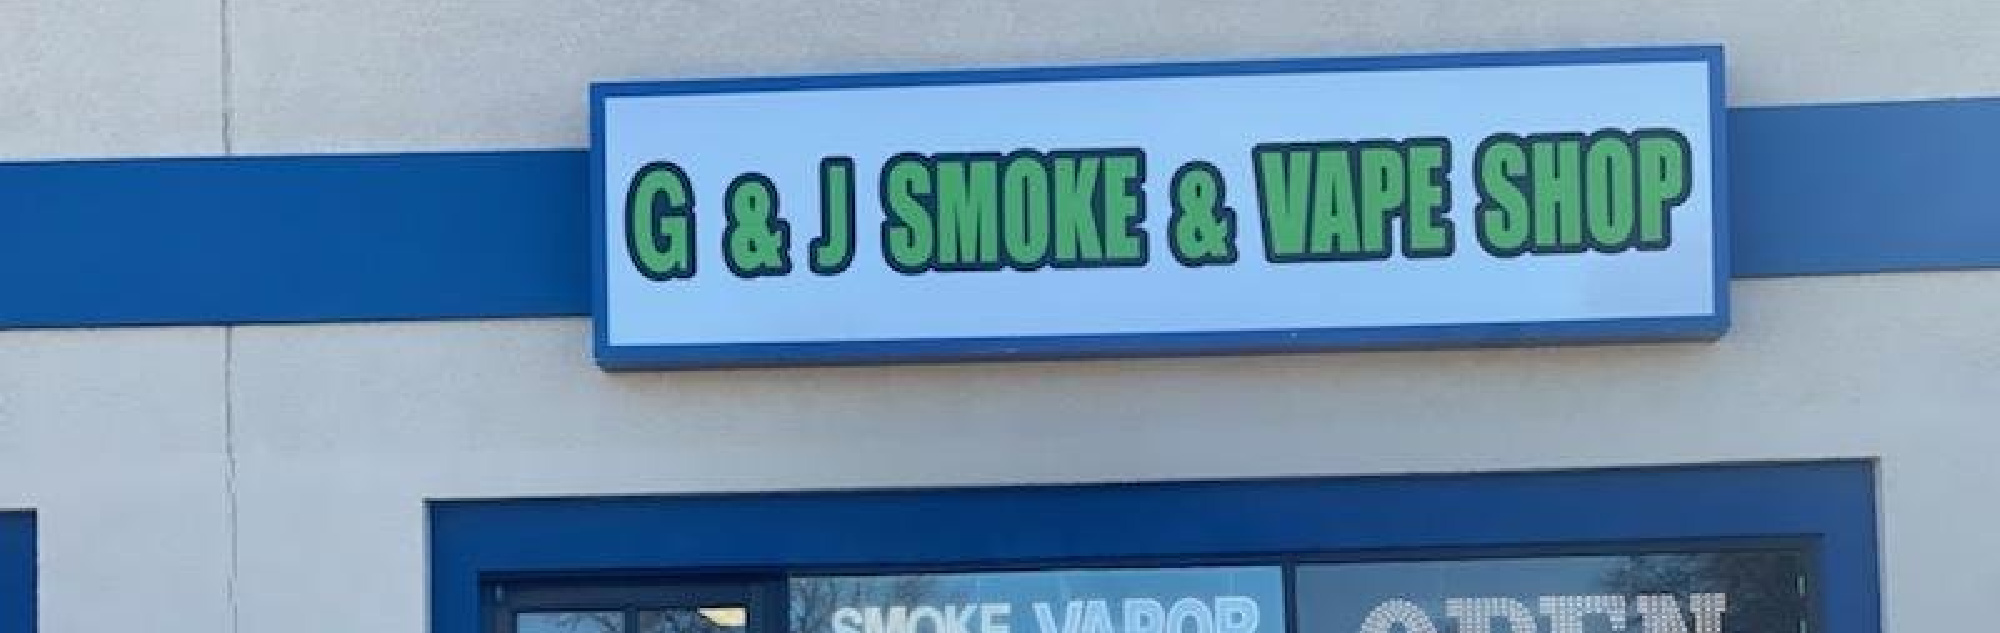 image of g & j smoke & vape shop in lincoln ne